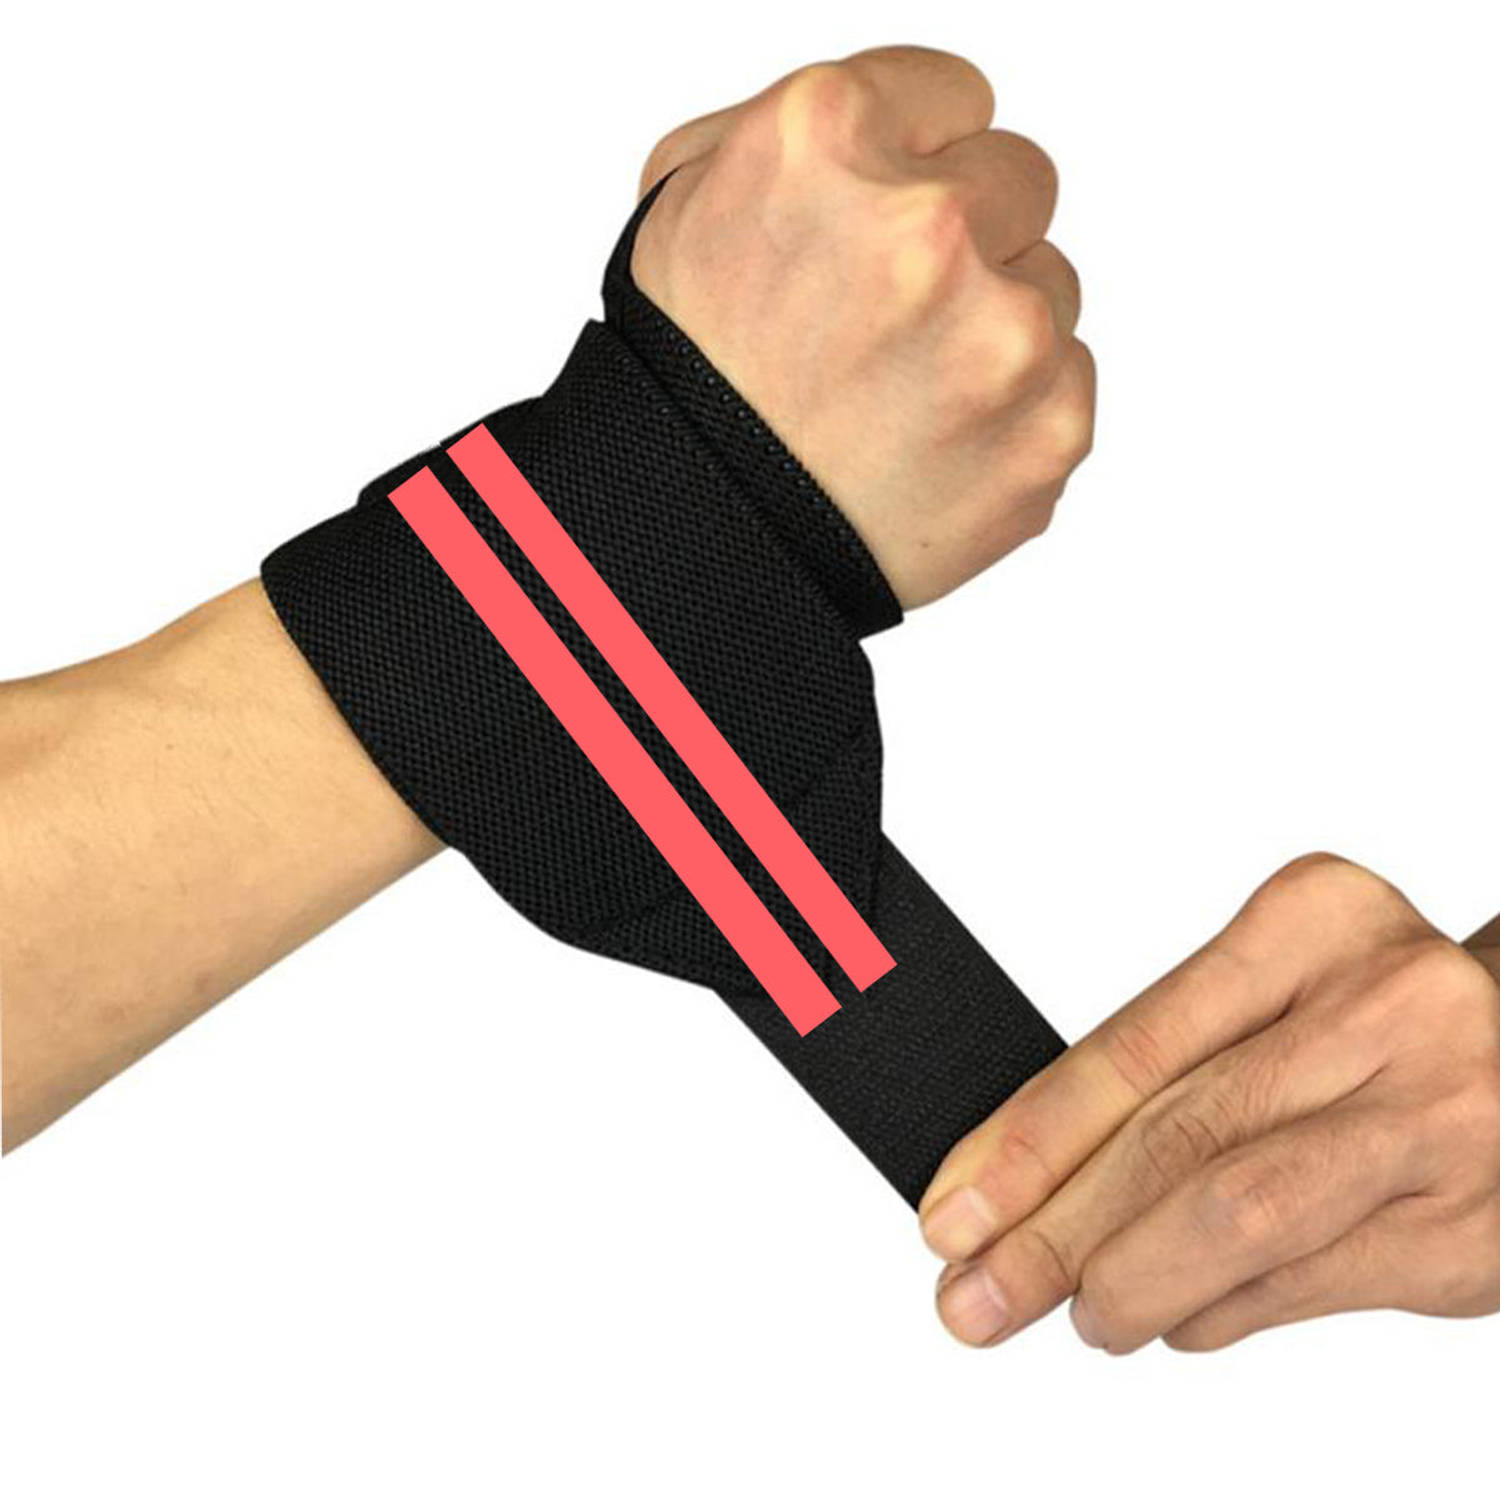 Fitness / Crossfit Polsband - 2 stuks - Rood / Zwart - Polsbandage Wrist Support Wraps - Pols Bandage Band - Bodybuilding Support - Gewichthef Straps - Krachttraining Lifting Worko